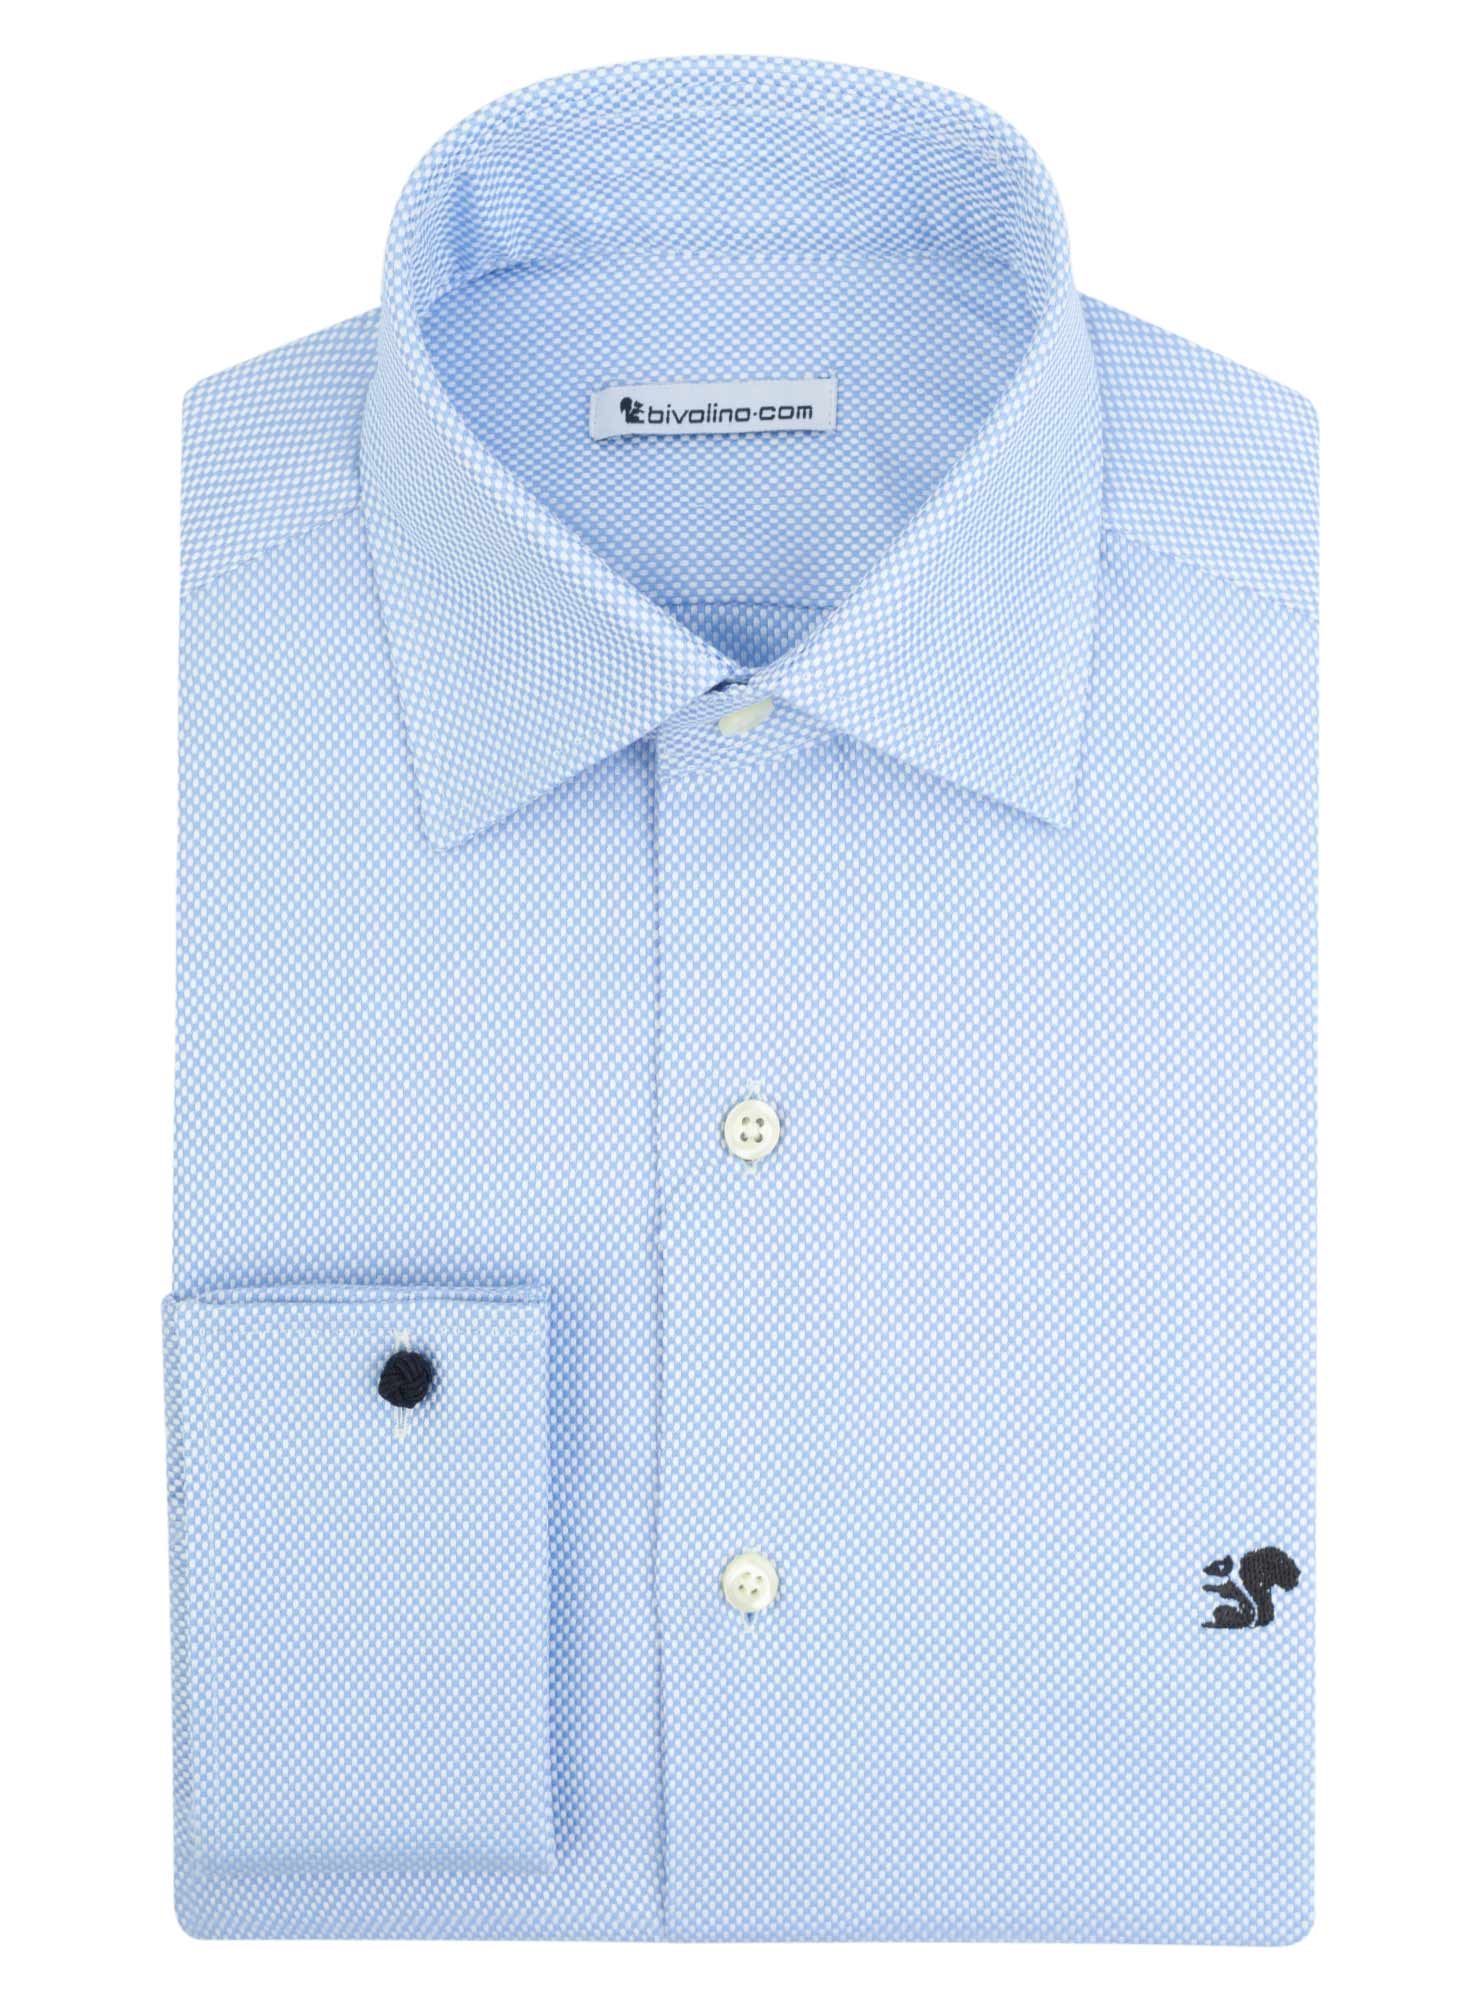 PORDENONE - Royal Blue Dobby camicia da uomo - Bedford 2